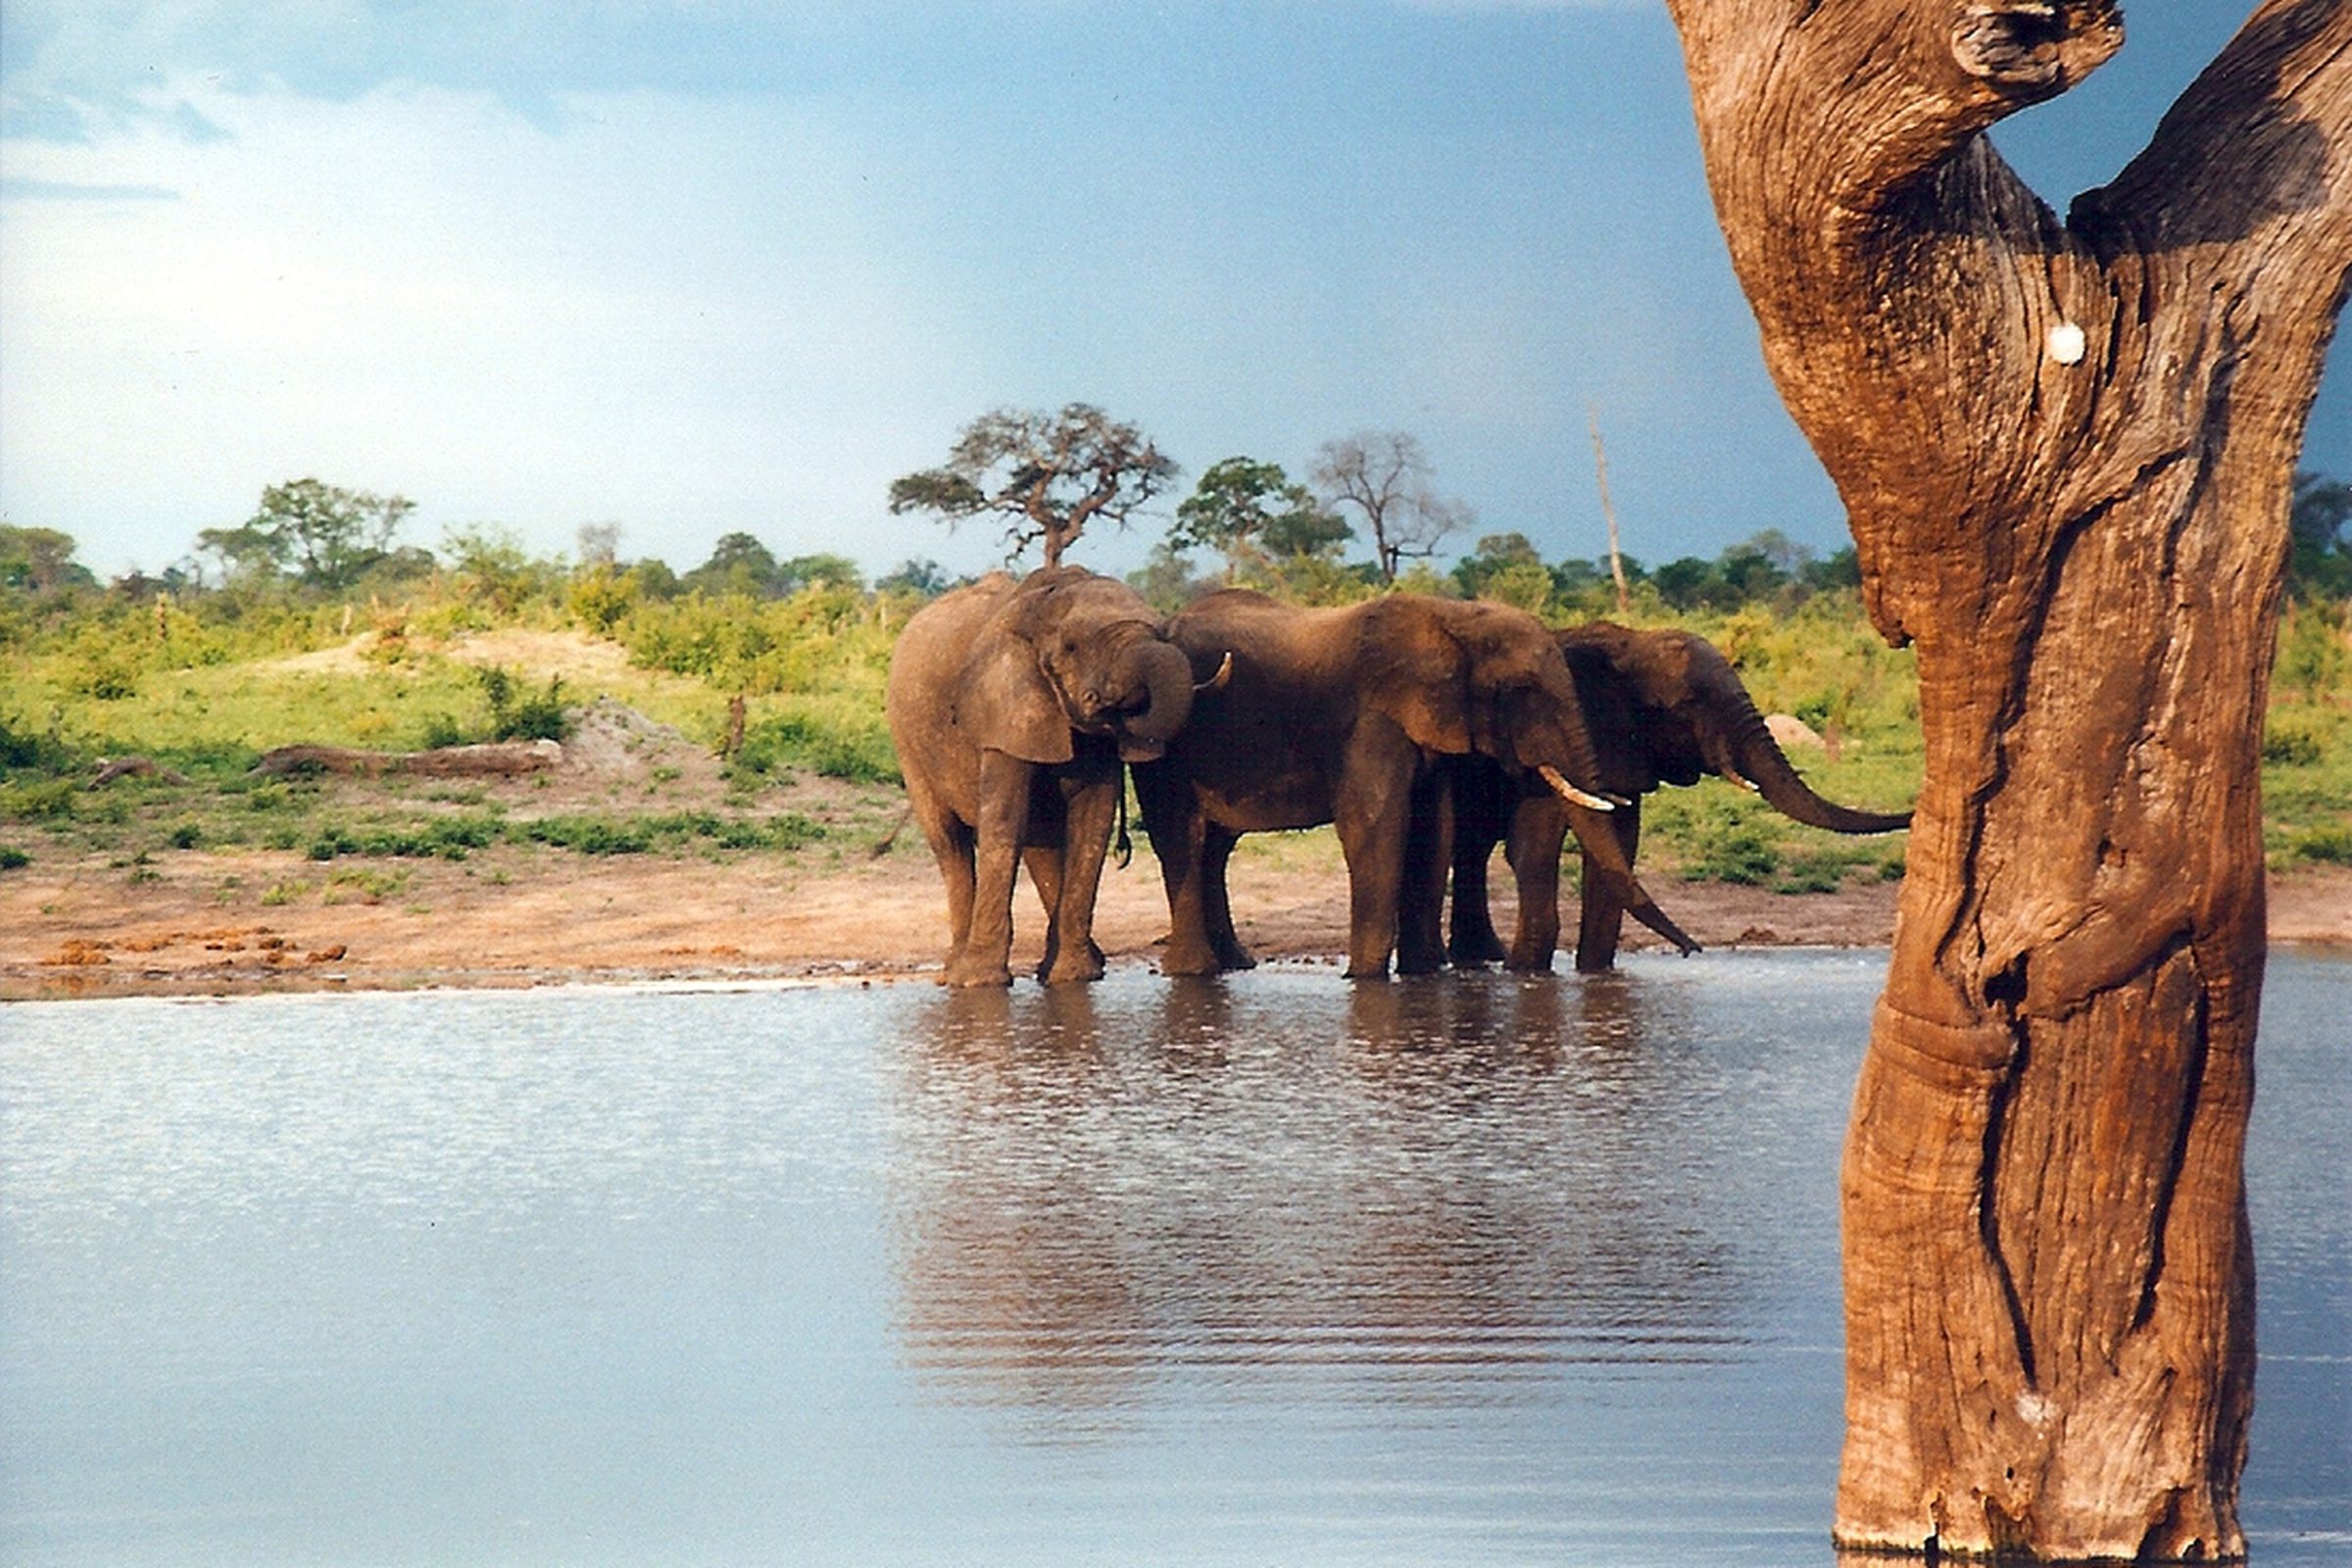 elephant water hole (wikimedia)